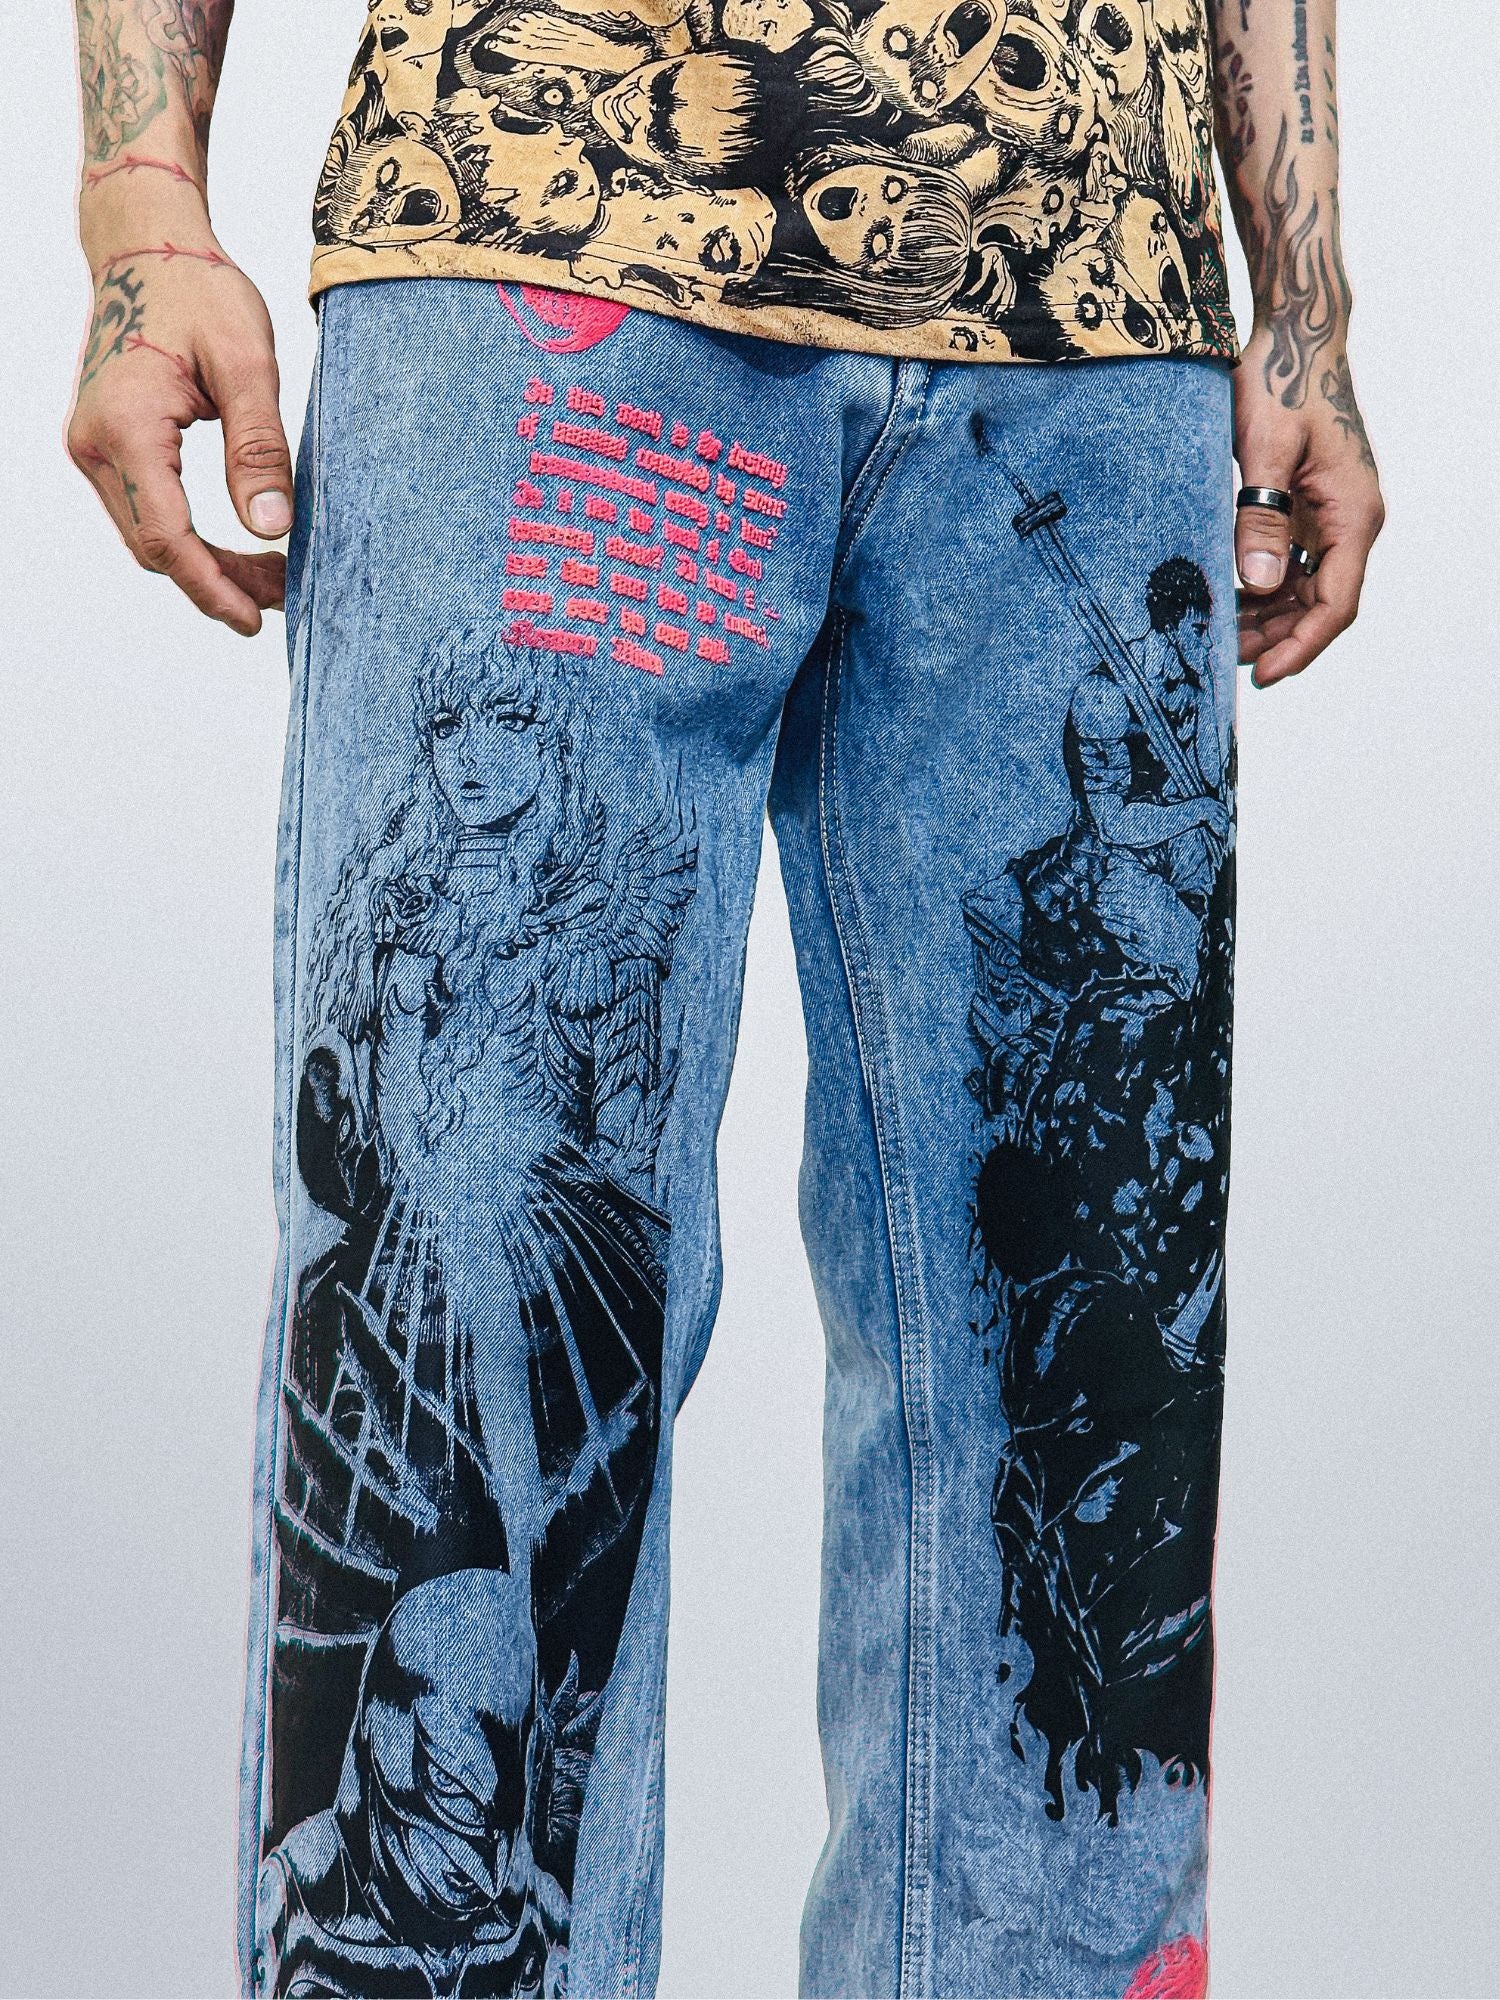 Guts x Griffith: Printed Berserk Blue Denim Jeans